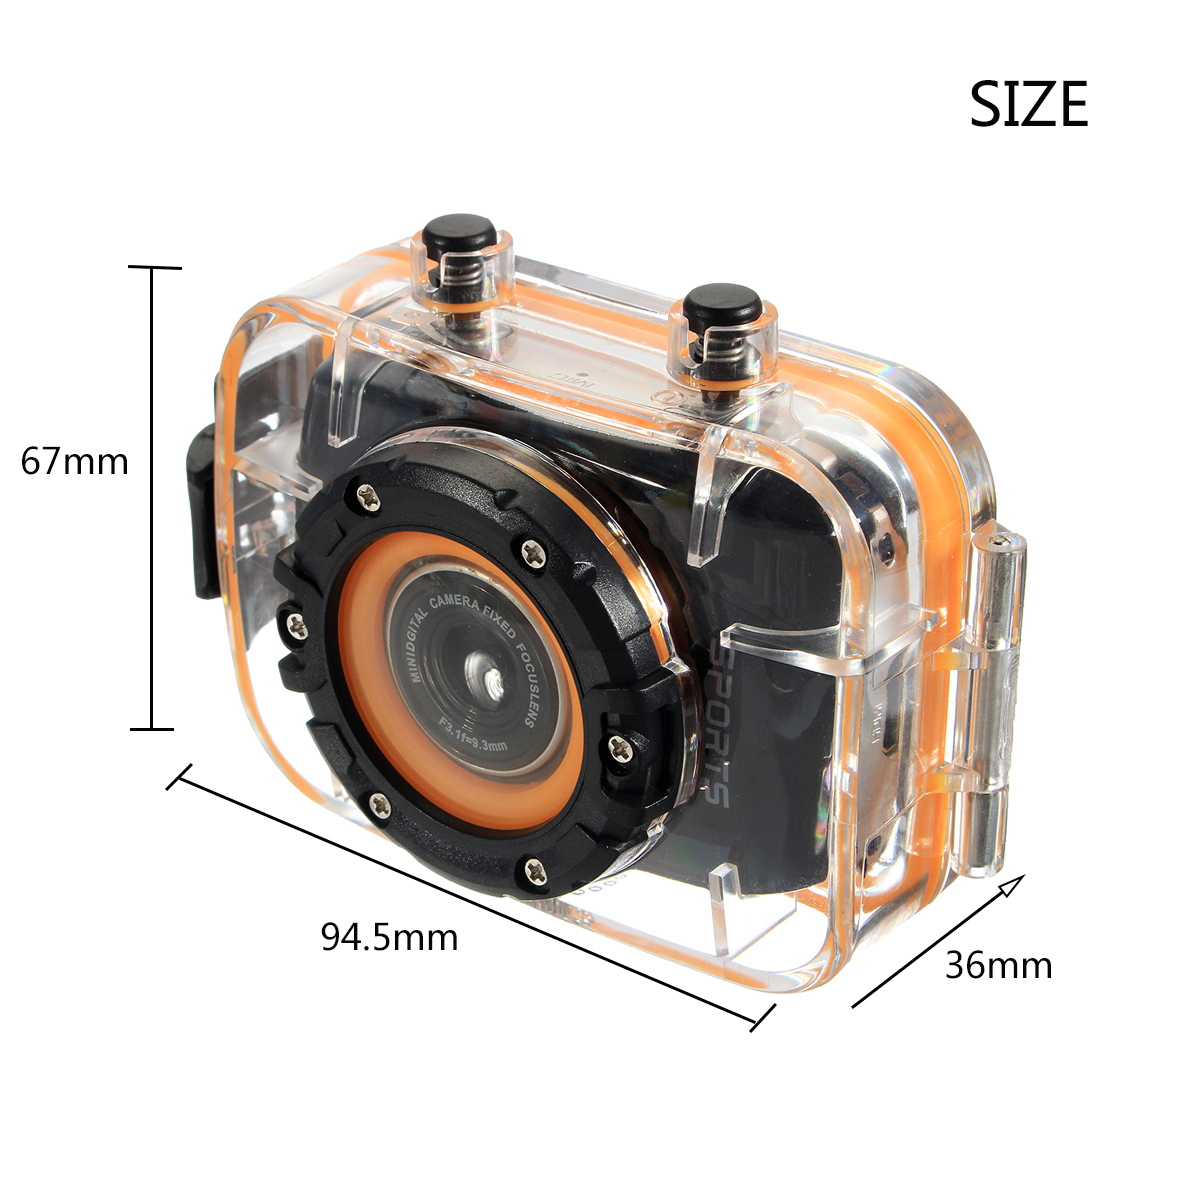 W108-2-Inch-1080P-HD-Sport-CameraMini-Car-Action-10-Meters-Waterproof-Buit-in-Lithium-Battery-1973027-4